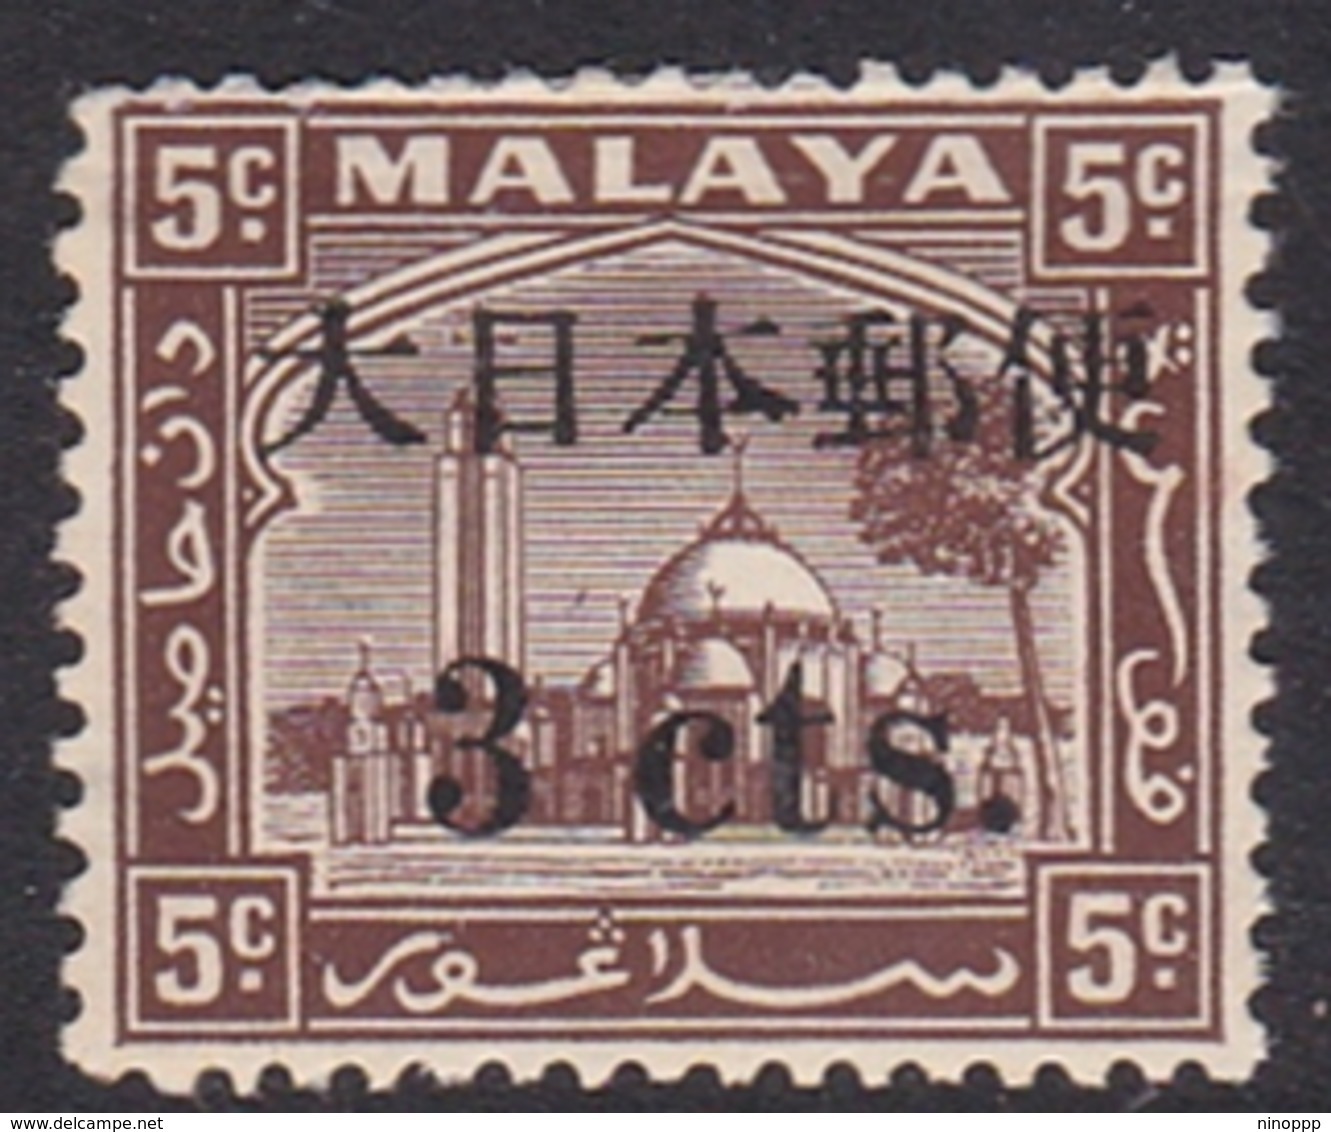 Malaya-Selangor Japan Occupation N 31 1943 3c On 5c Chocolate, Mint Never Hinged - Japanese Occupation